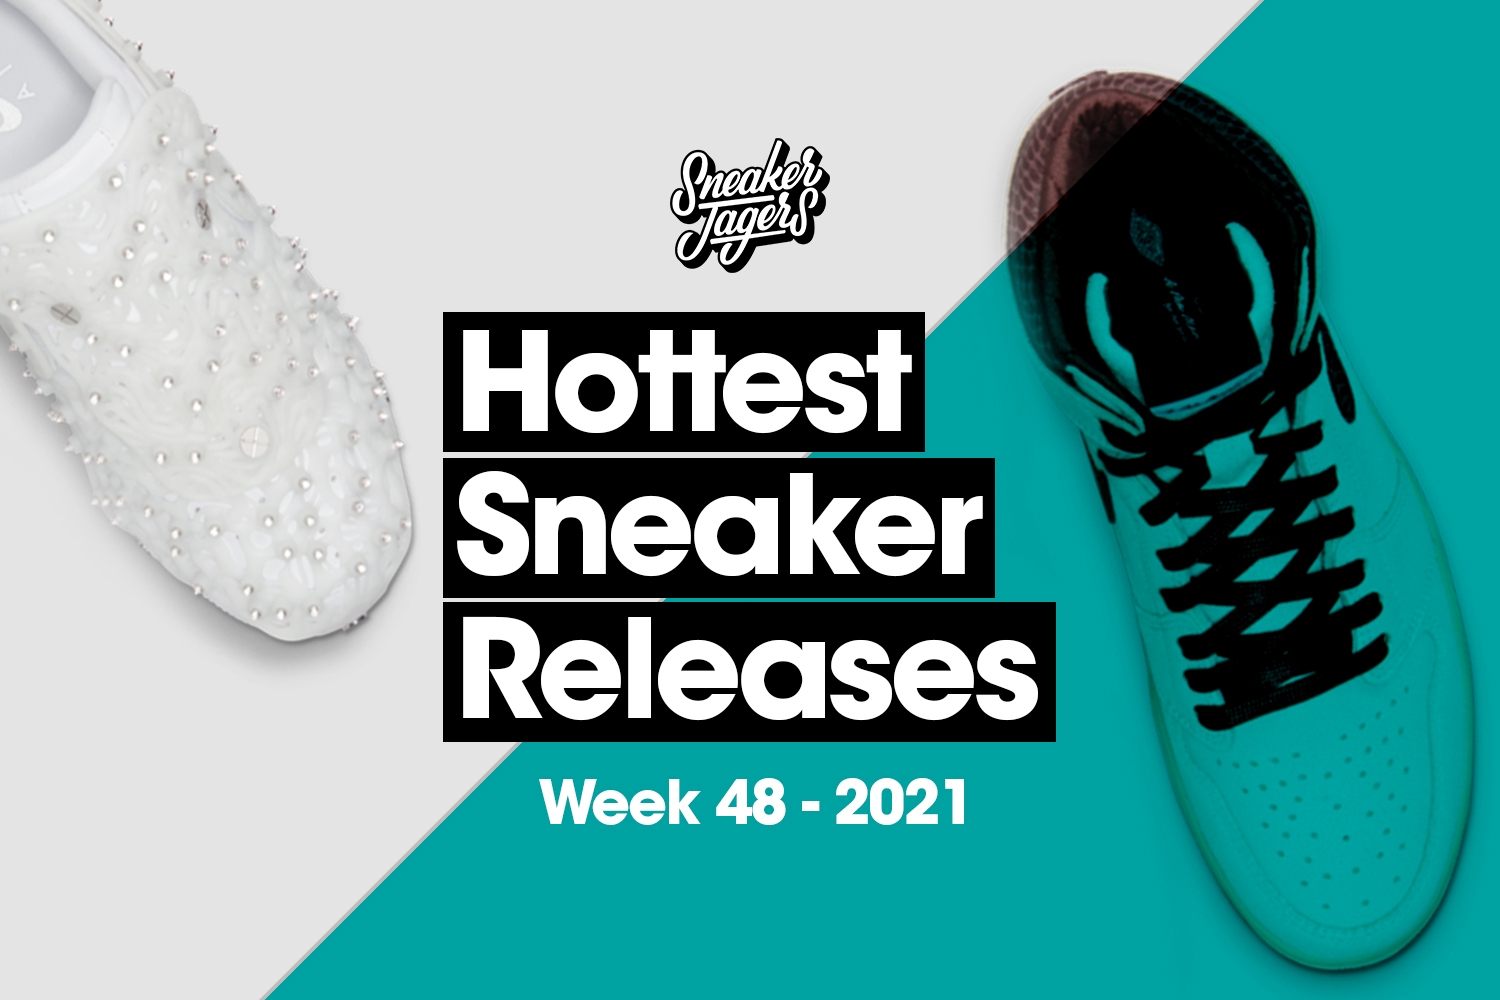 Hottest Sneaker Releases - Week 48